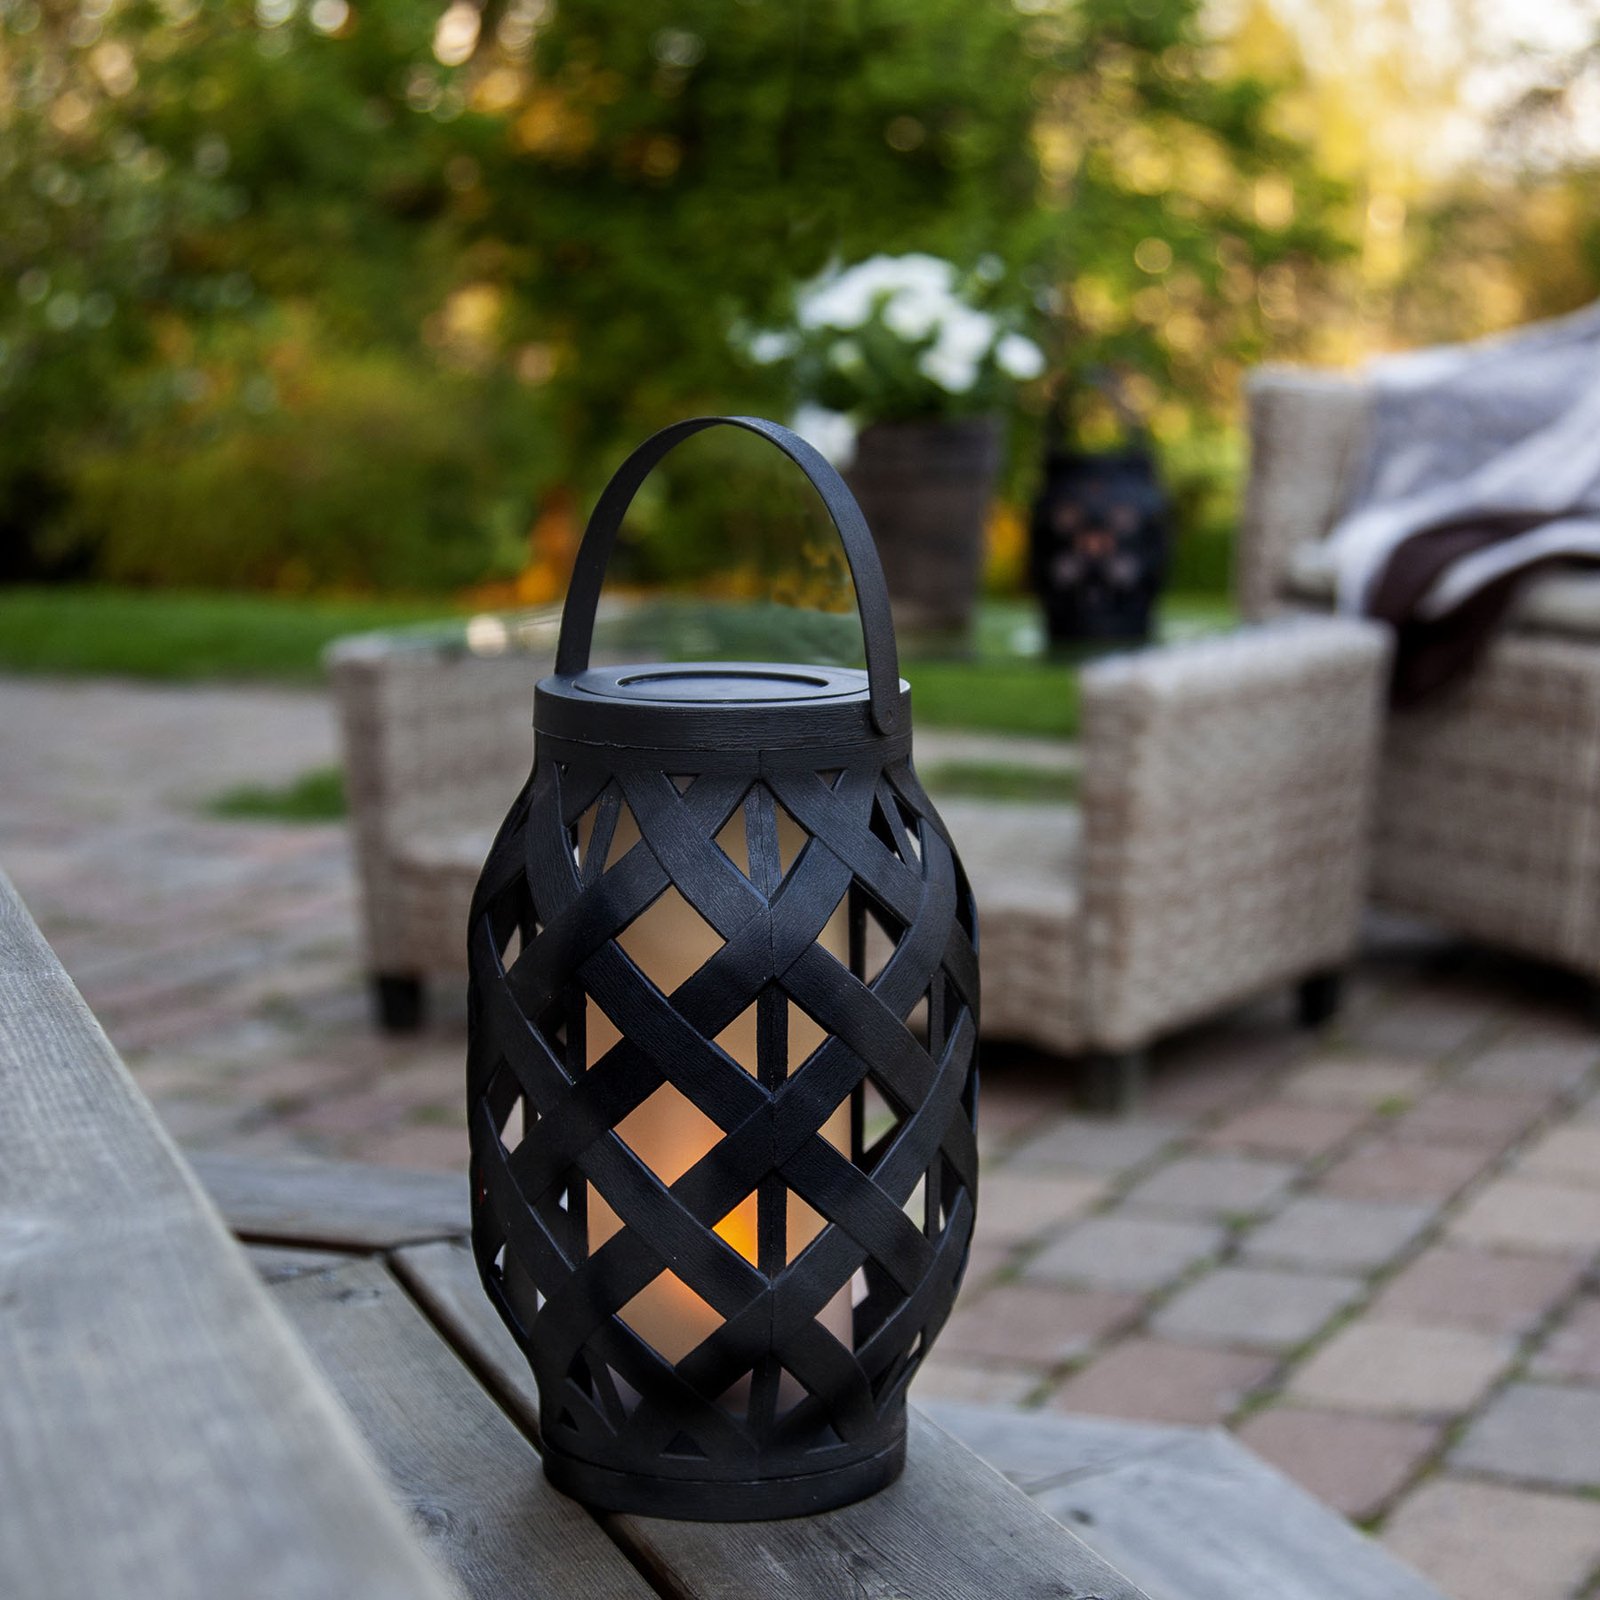 Flame Lantern -LED-lyhty, musta, korkeus 23 cm